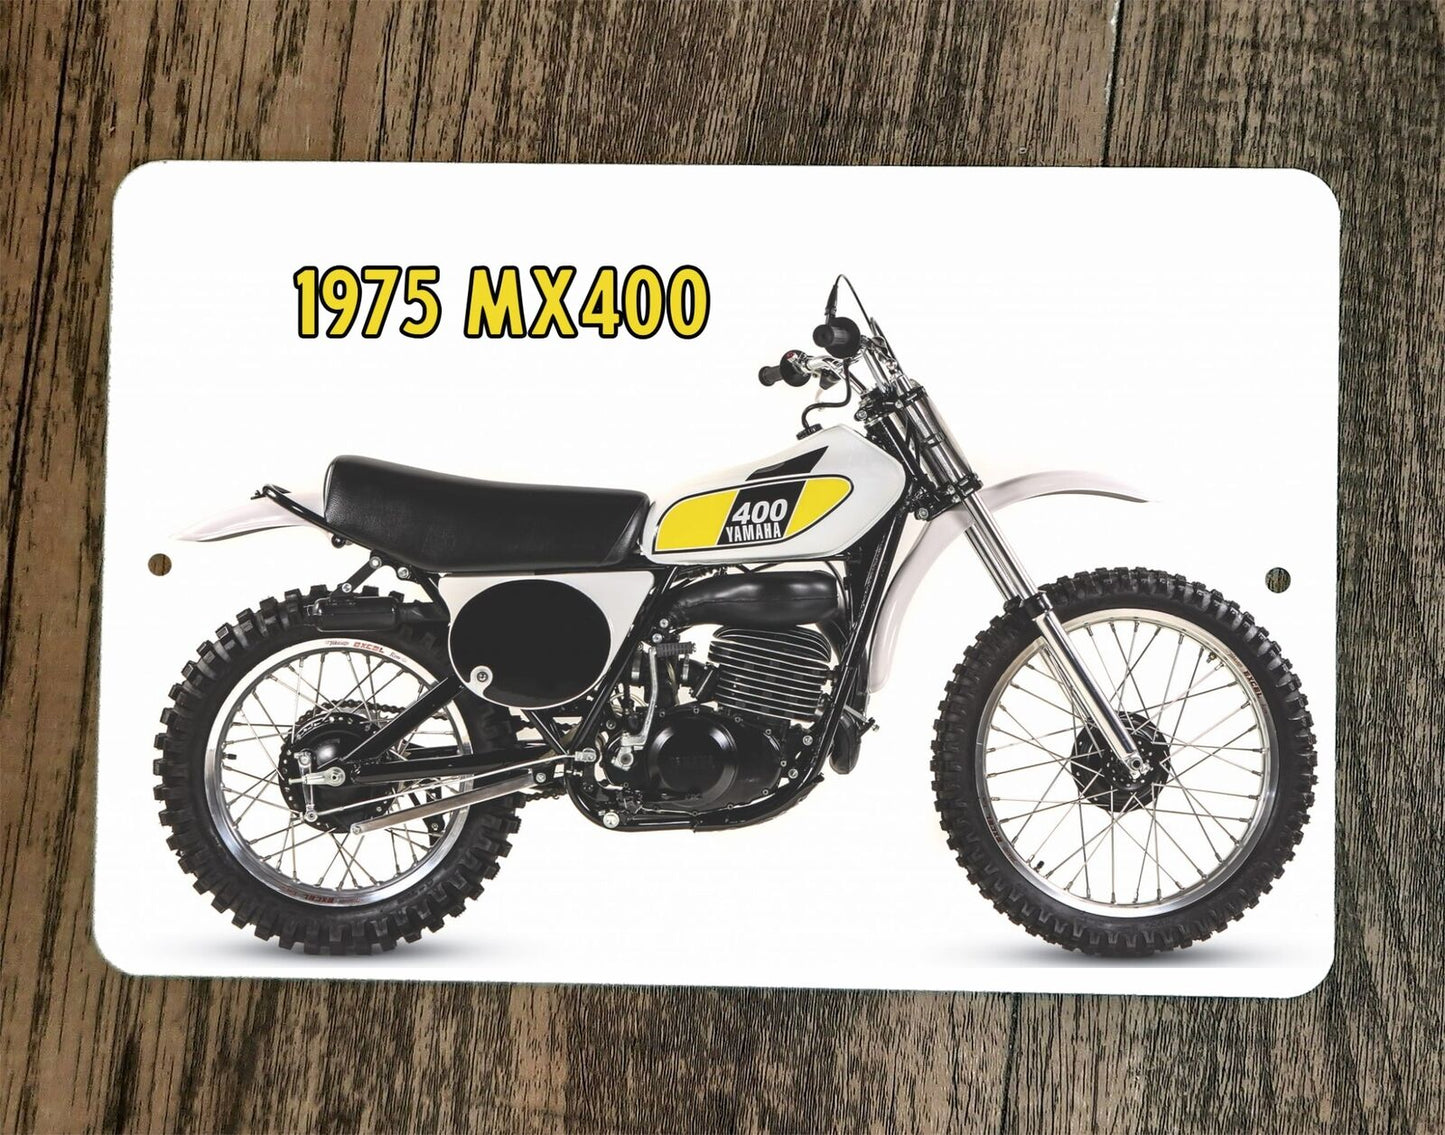 1975 Yamaha MX400 Motorcross Dirt Bike Motorcycle Pic 8x12 Metal Wall Sign